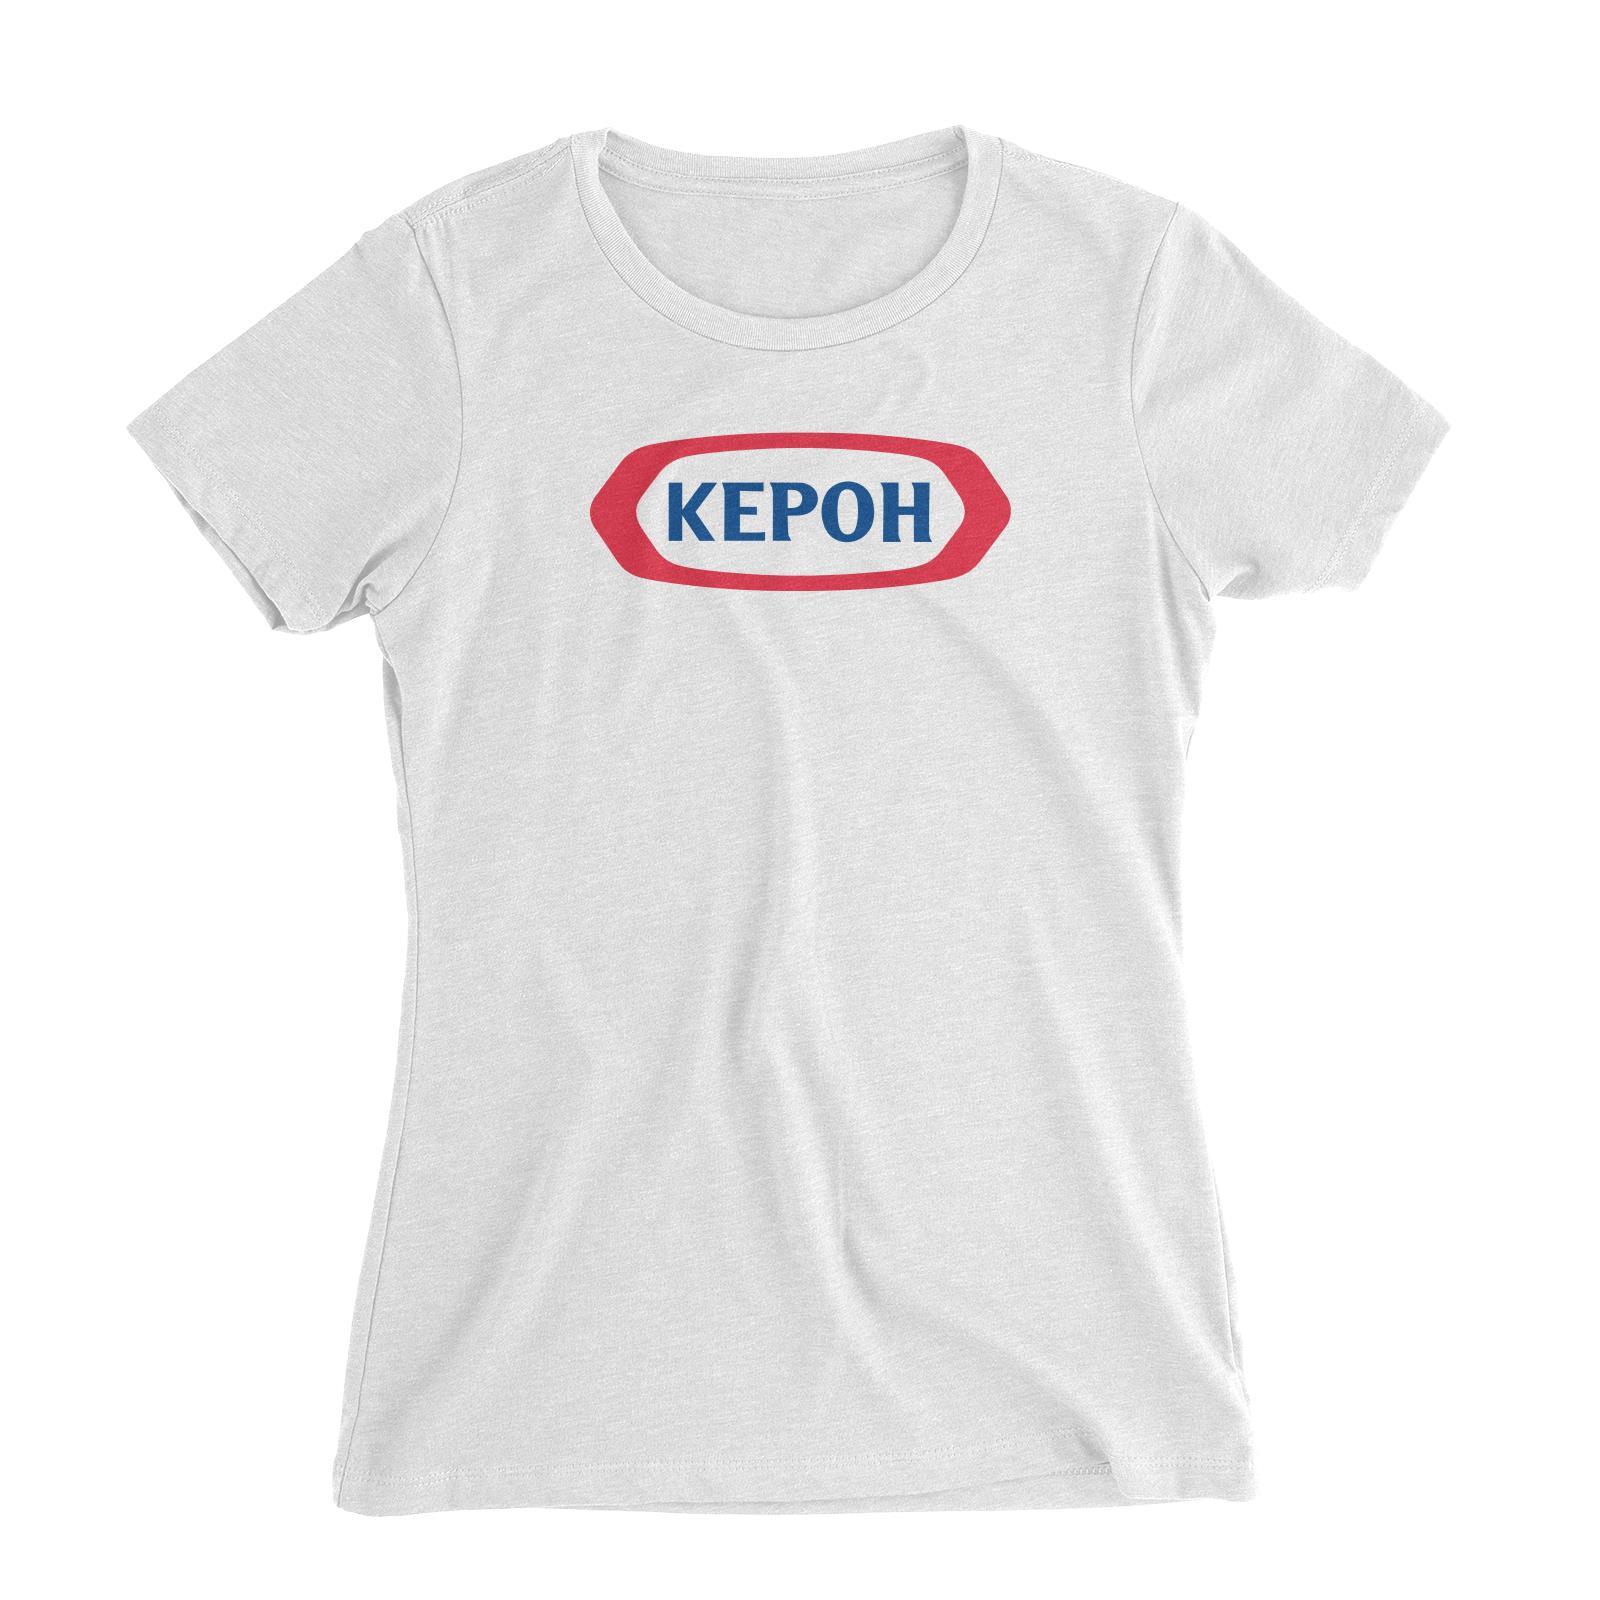 Slang Statement Kepoh Women's Slim Fit T-Shirt